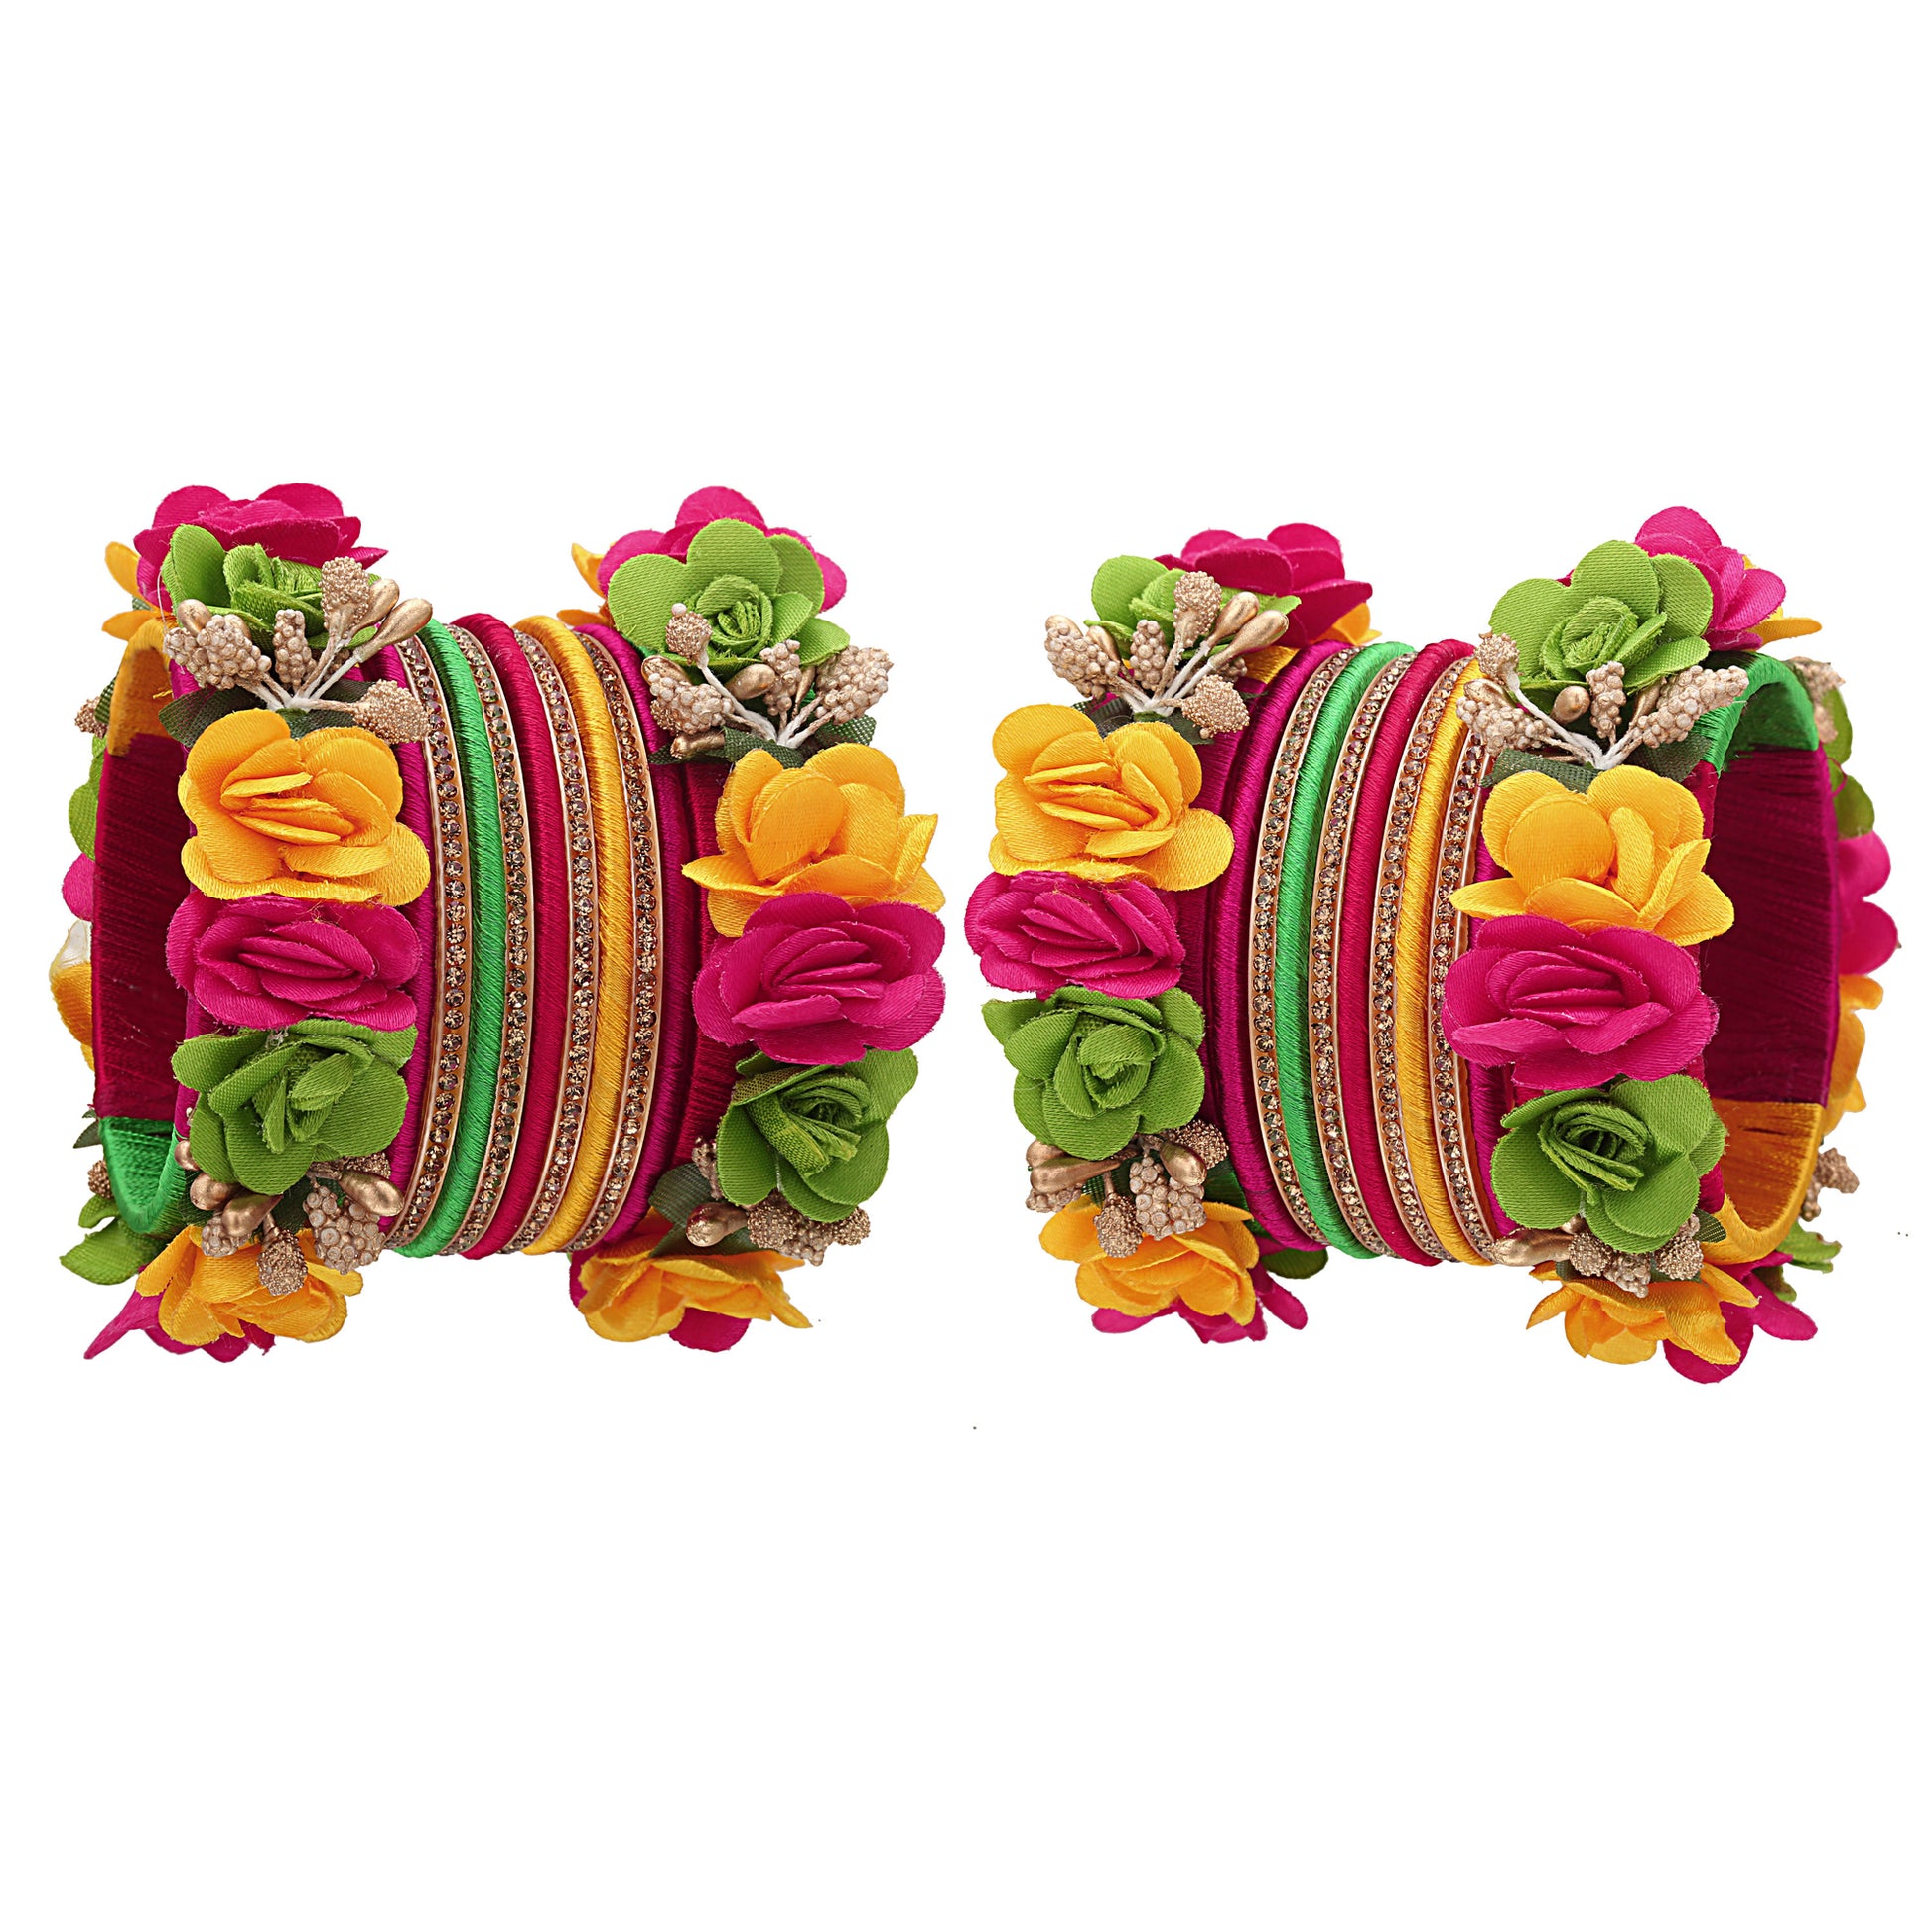 sukriti beautiful handcrafted multicolor flower designer silk thread bridal chuda wedding bangles for women – set of 22